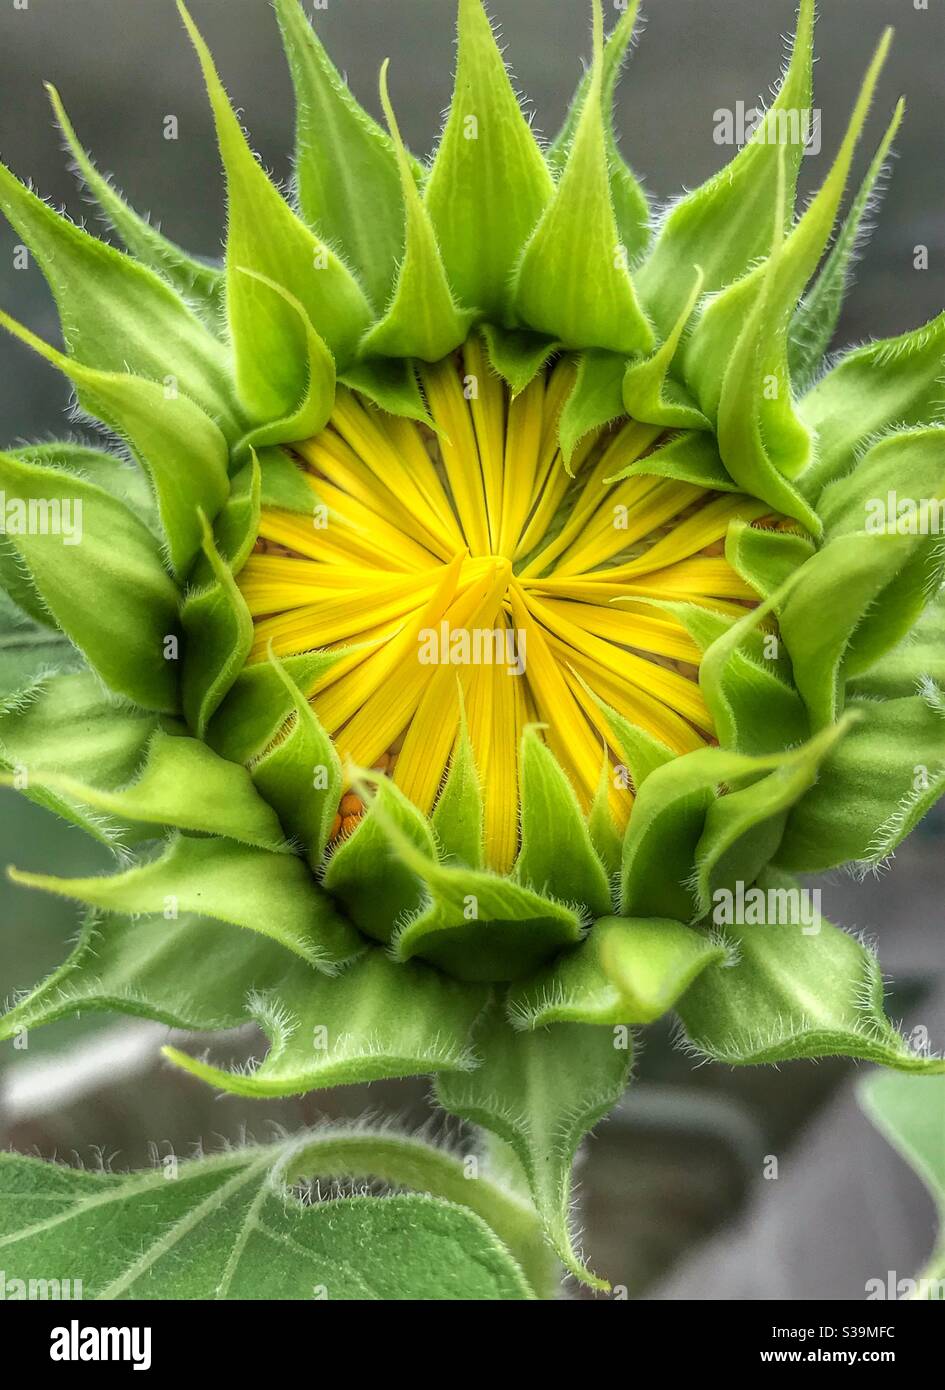 Sunflower just beginning to open Stock Photo